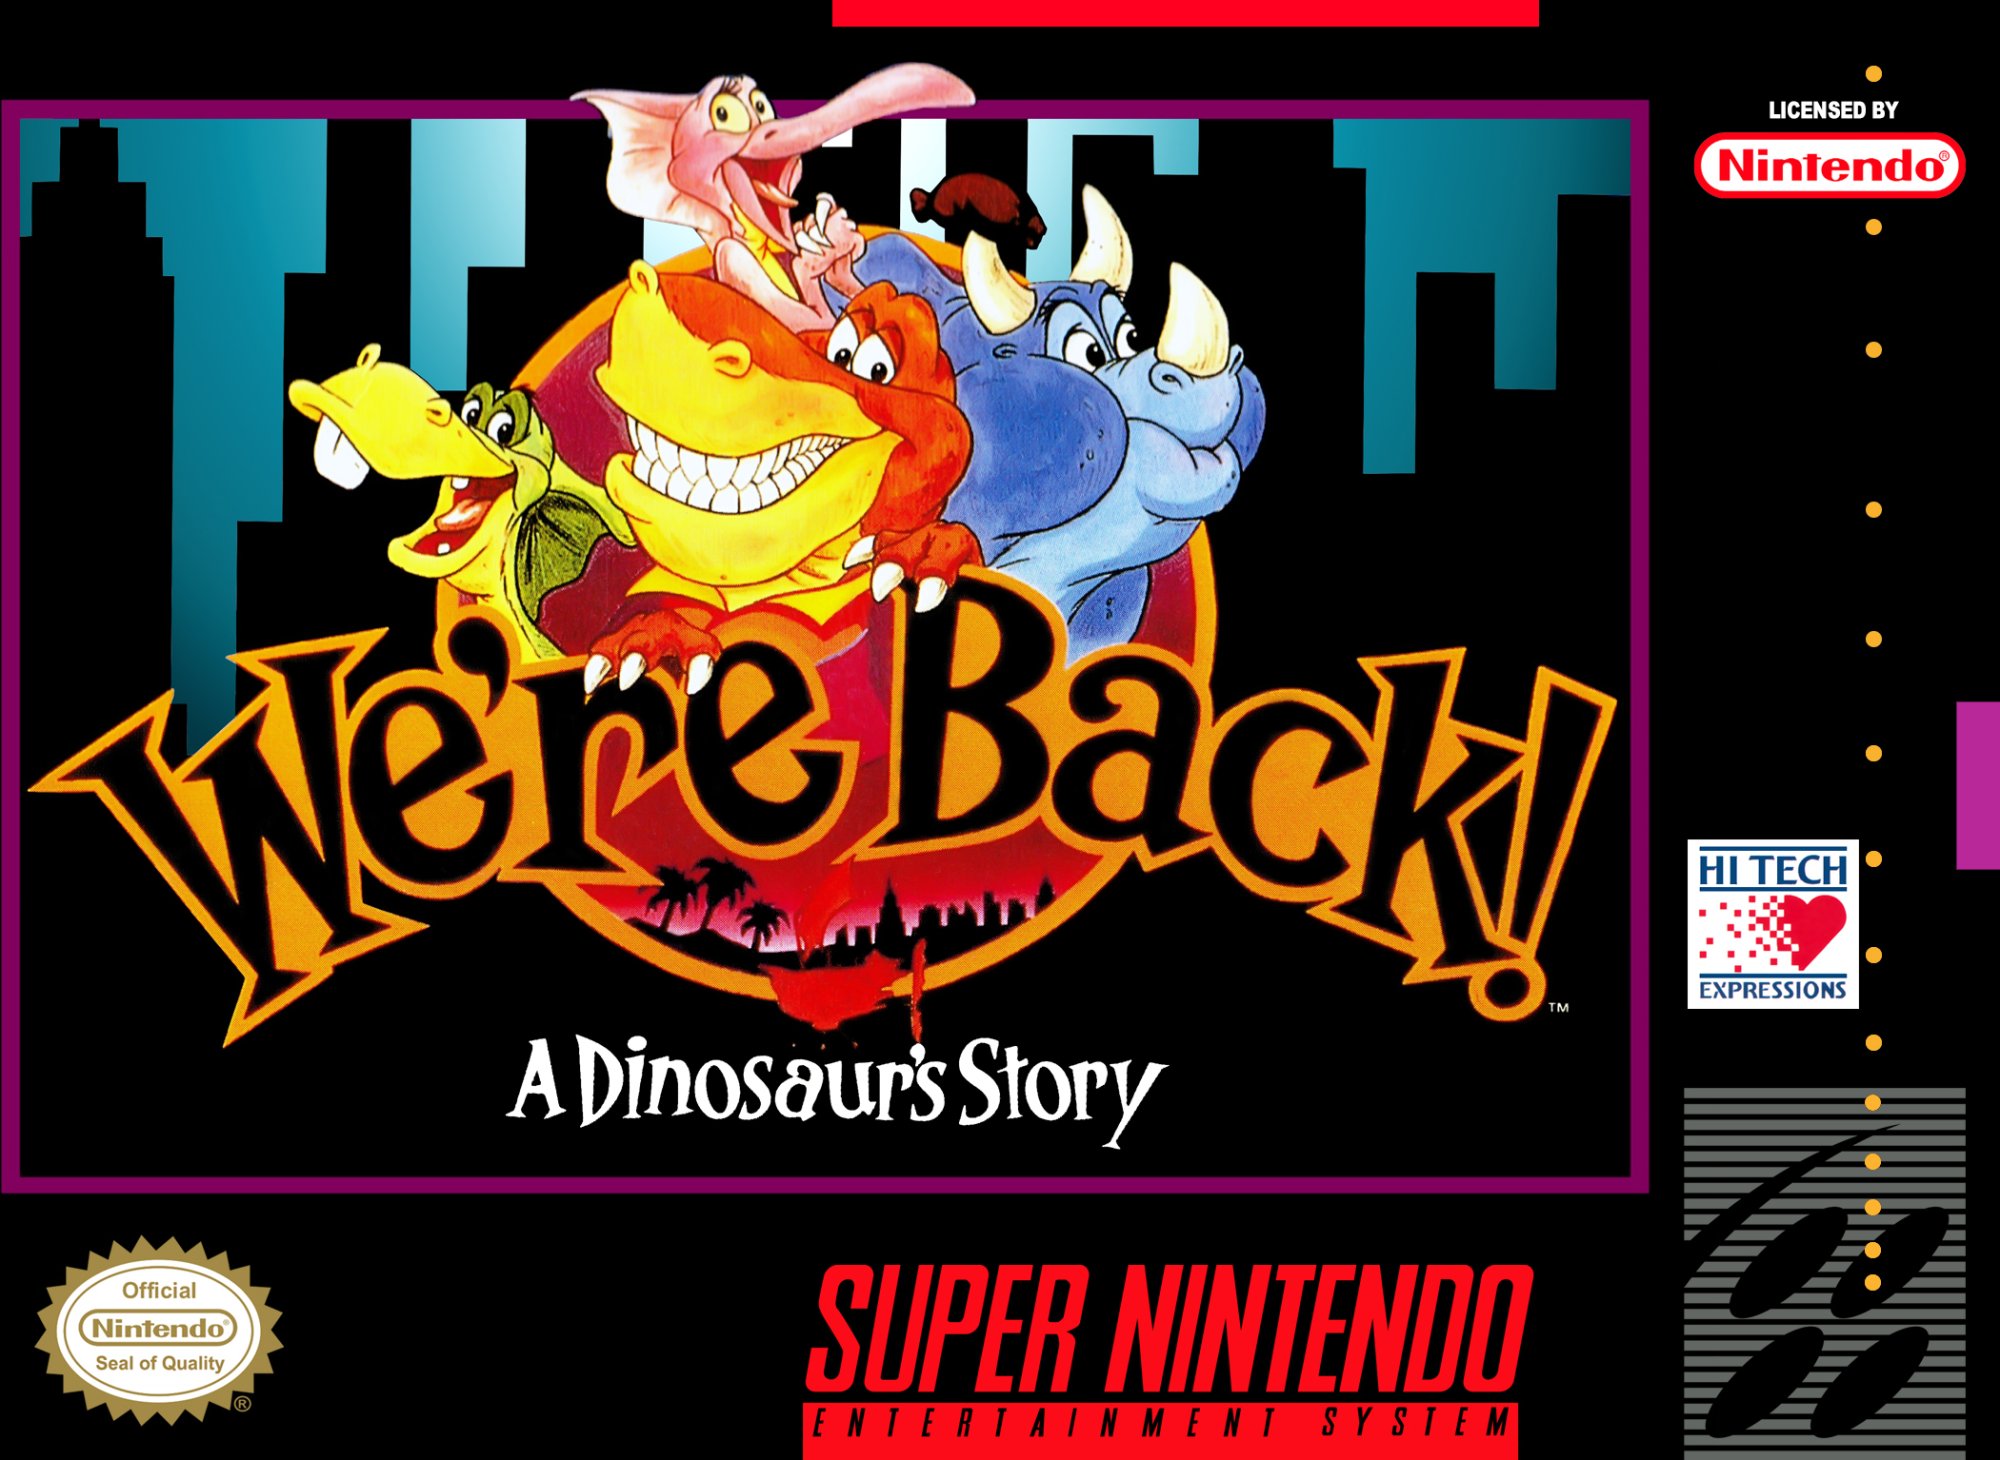 We're Back!: A Dinosaur's Story